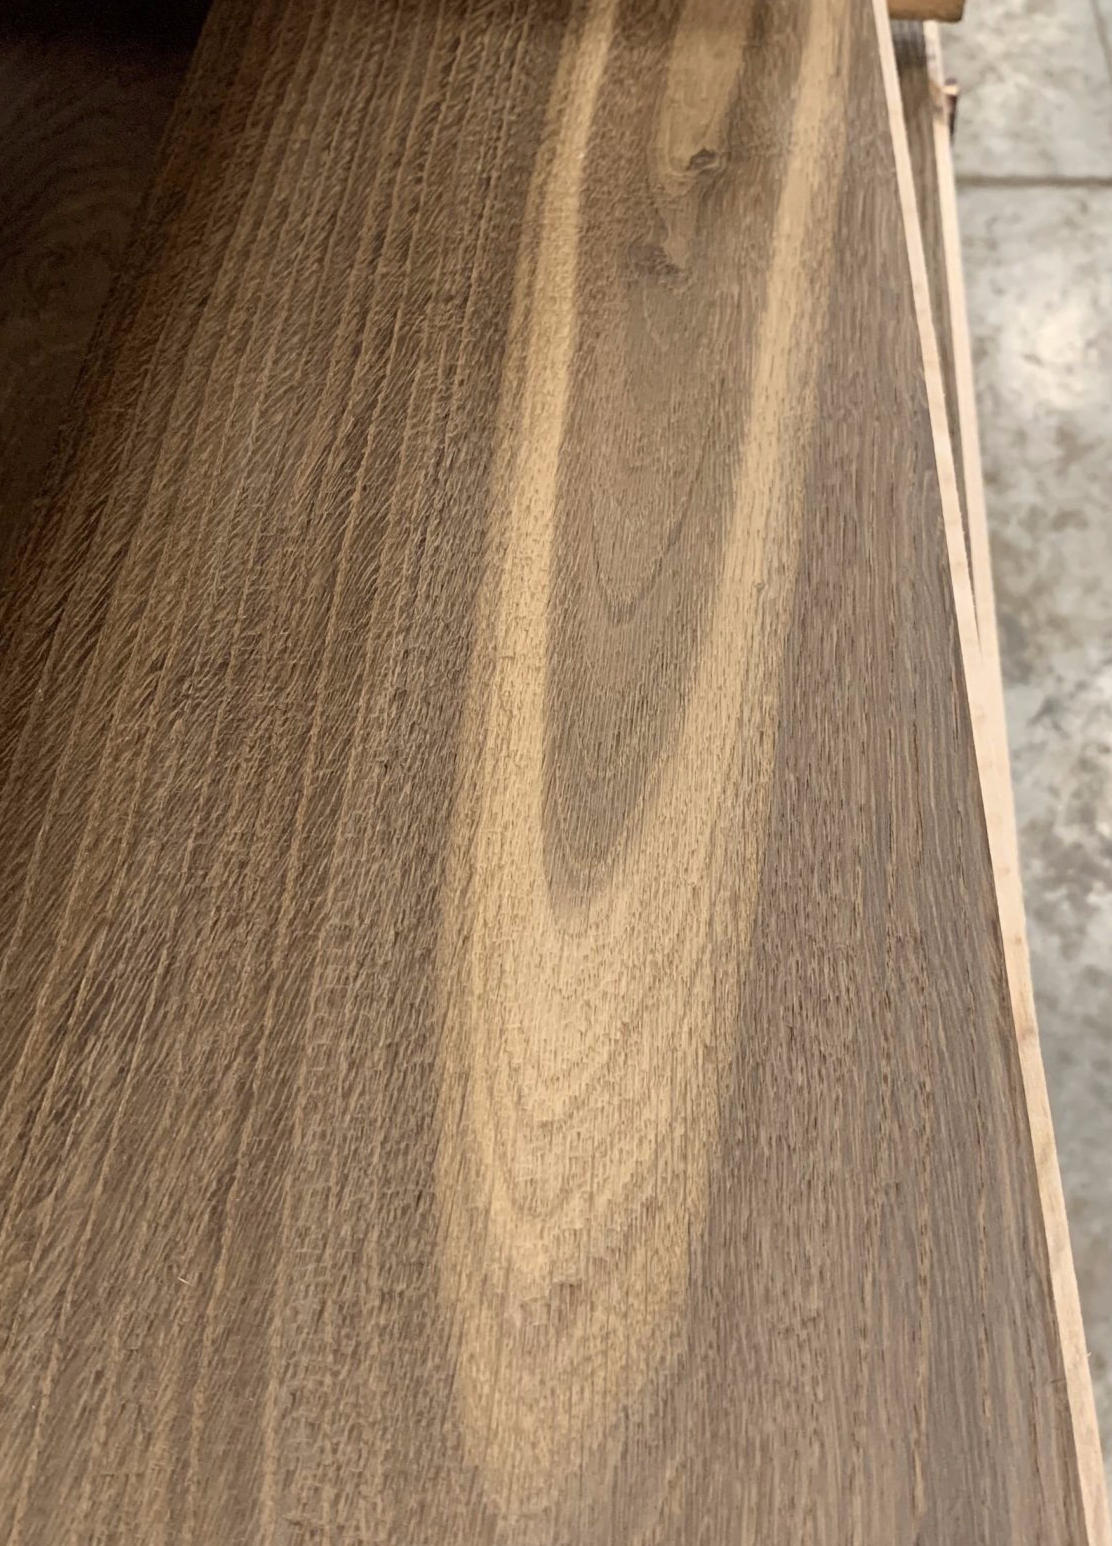 Fumed Hardwood Flooring with sapwood